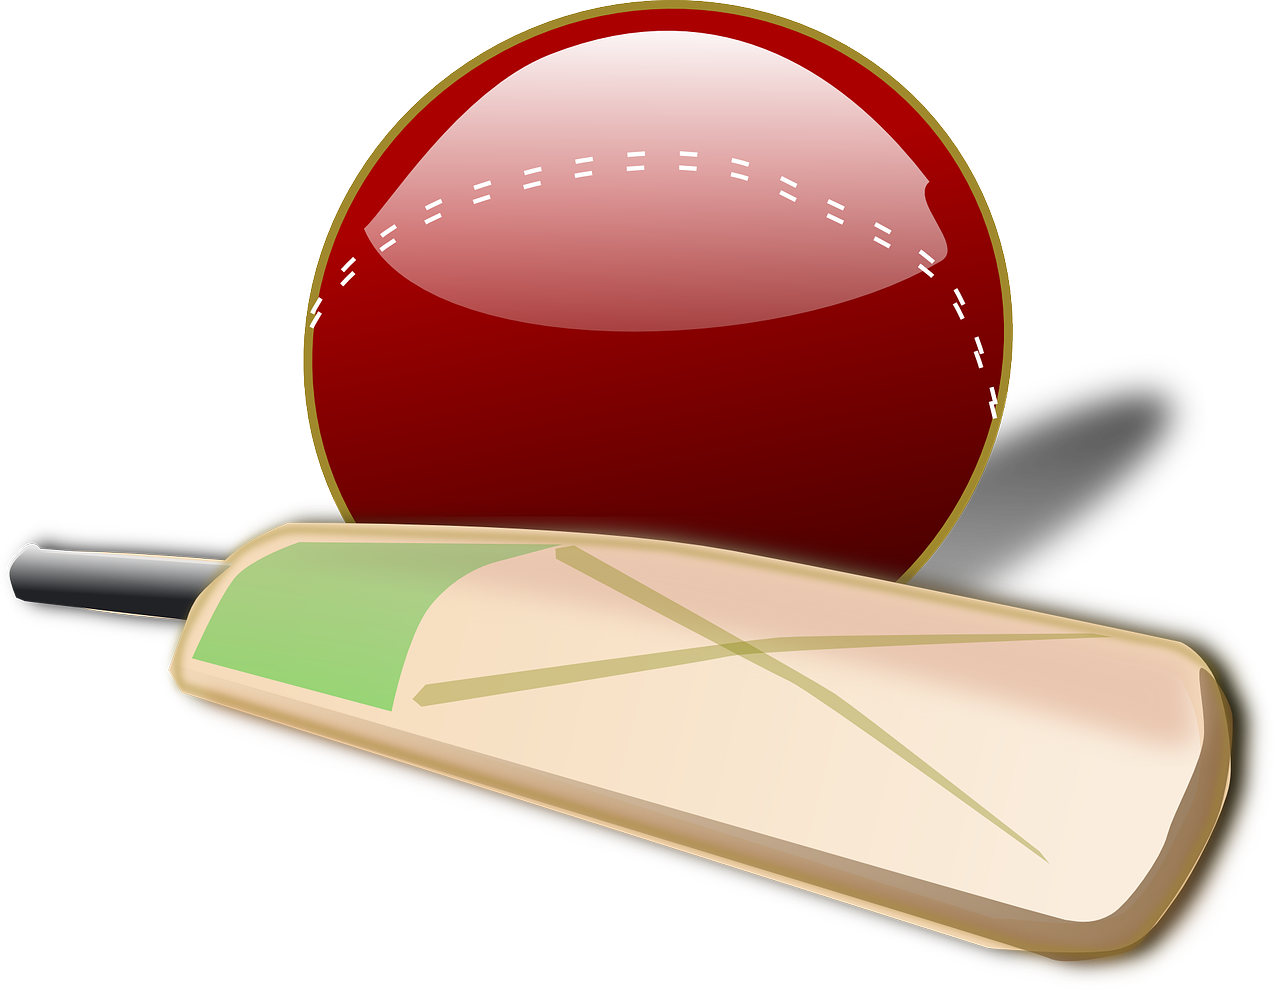 cricket bat ball free photo